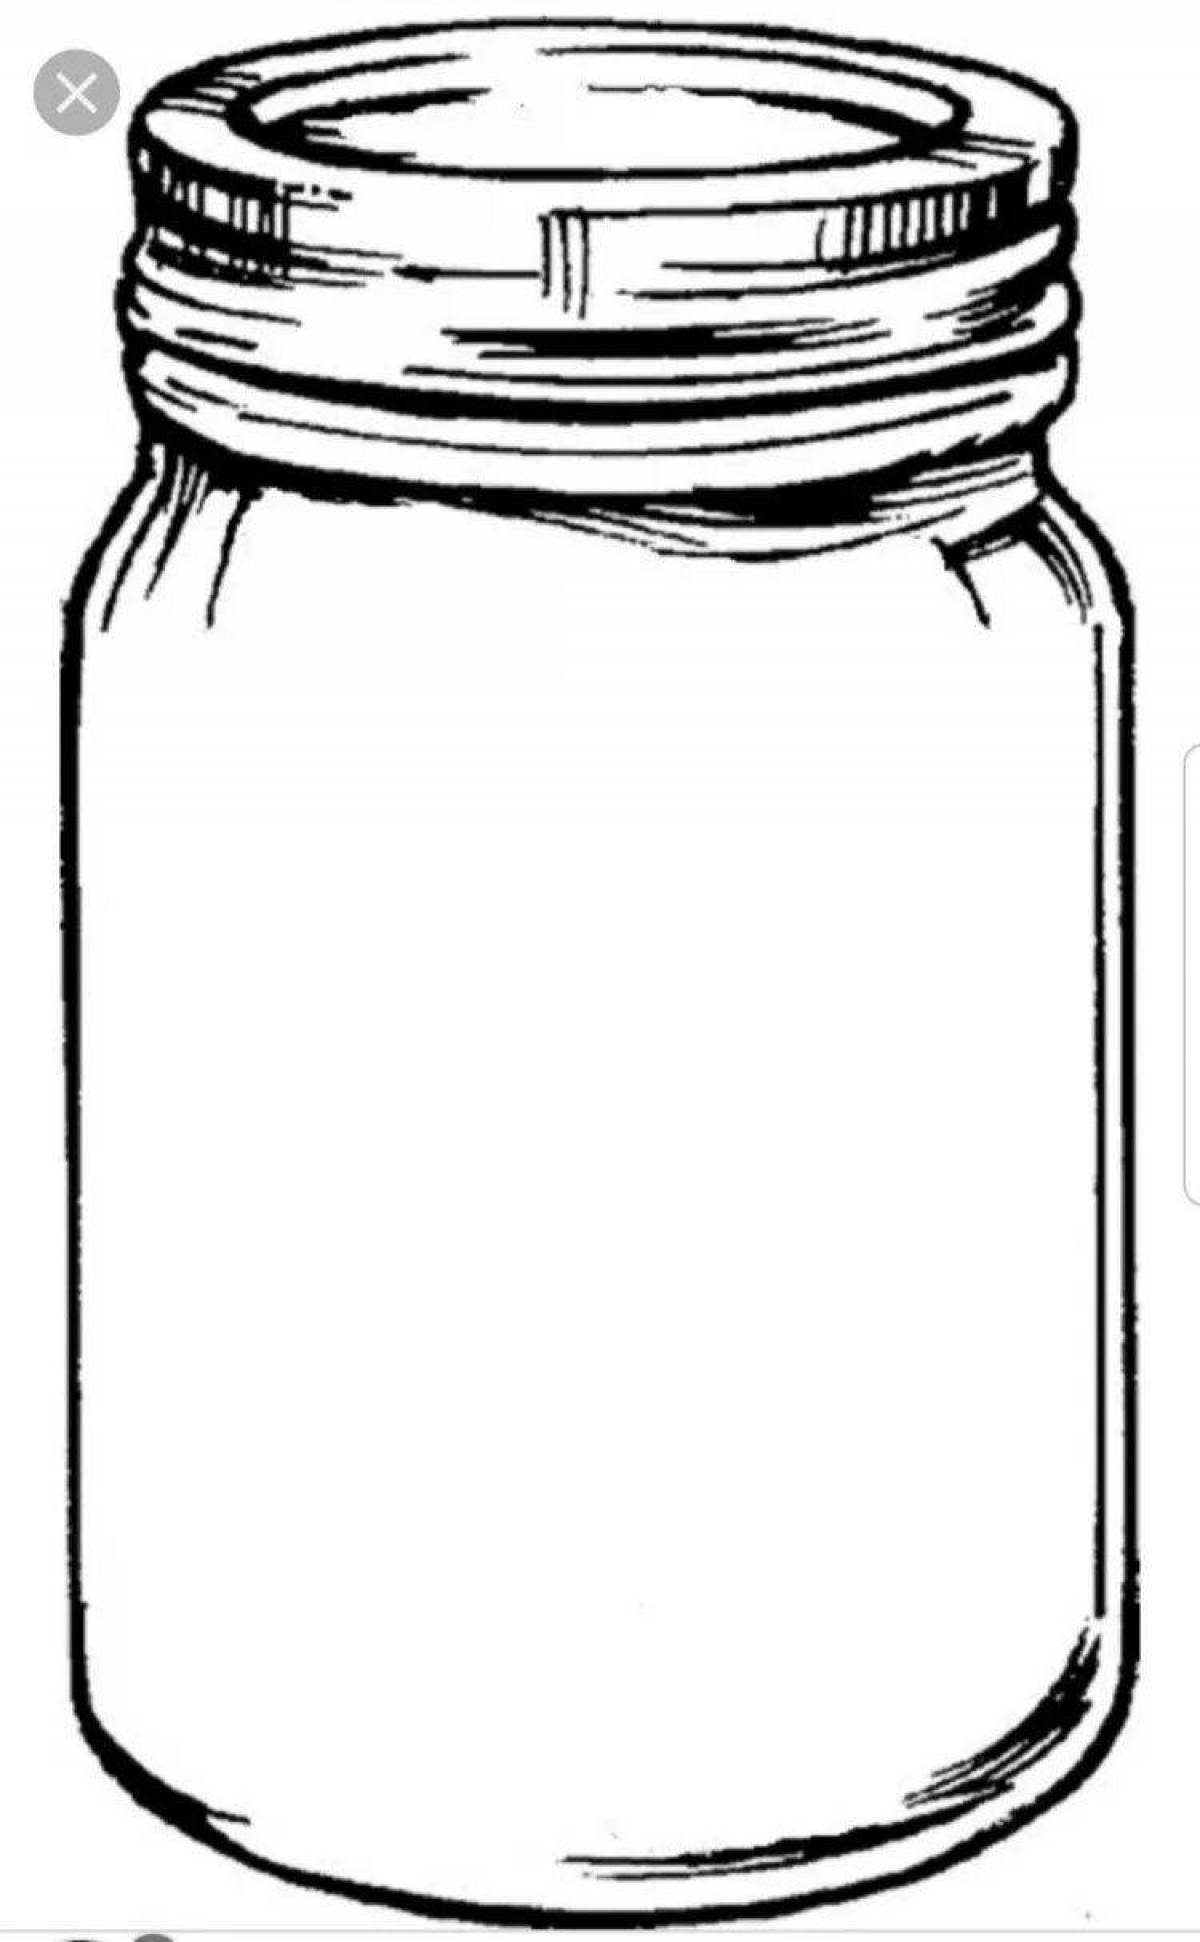 Bright jar is empty